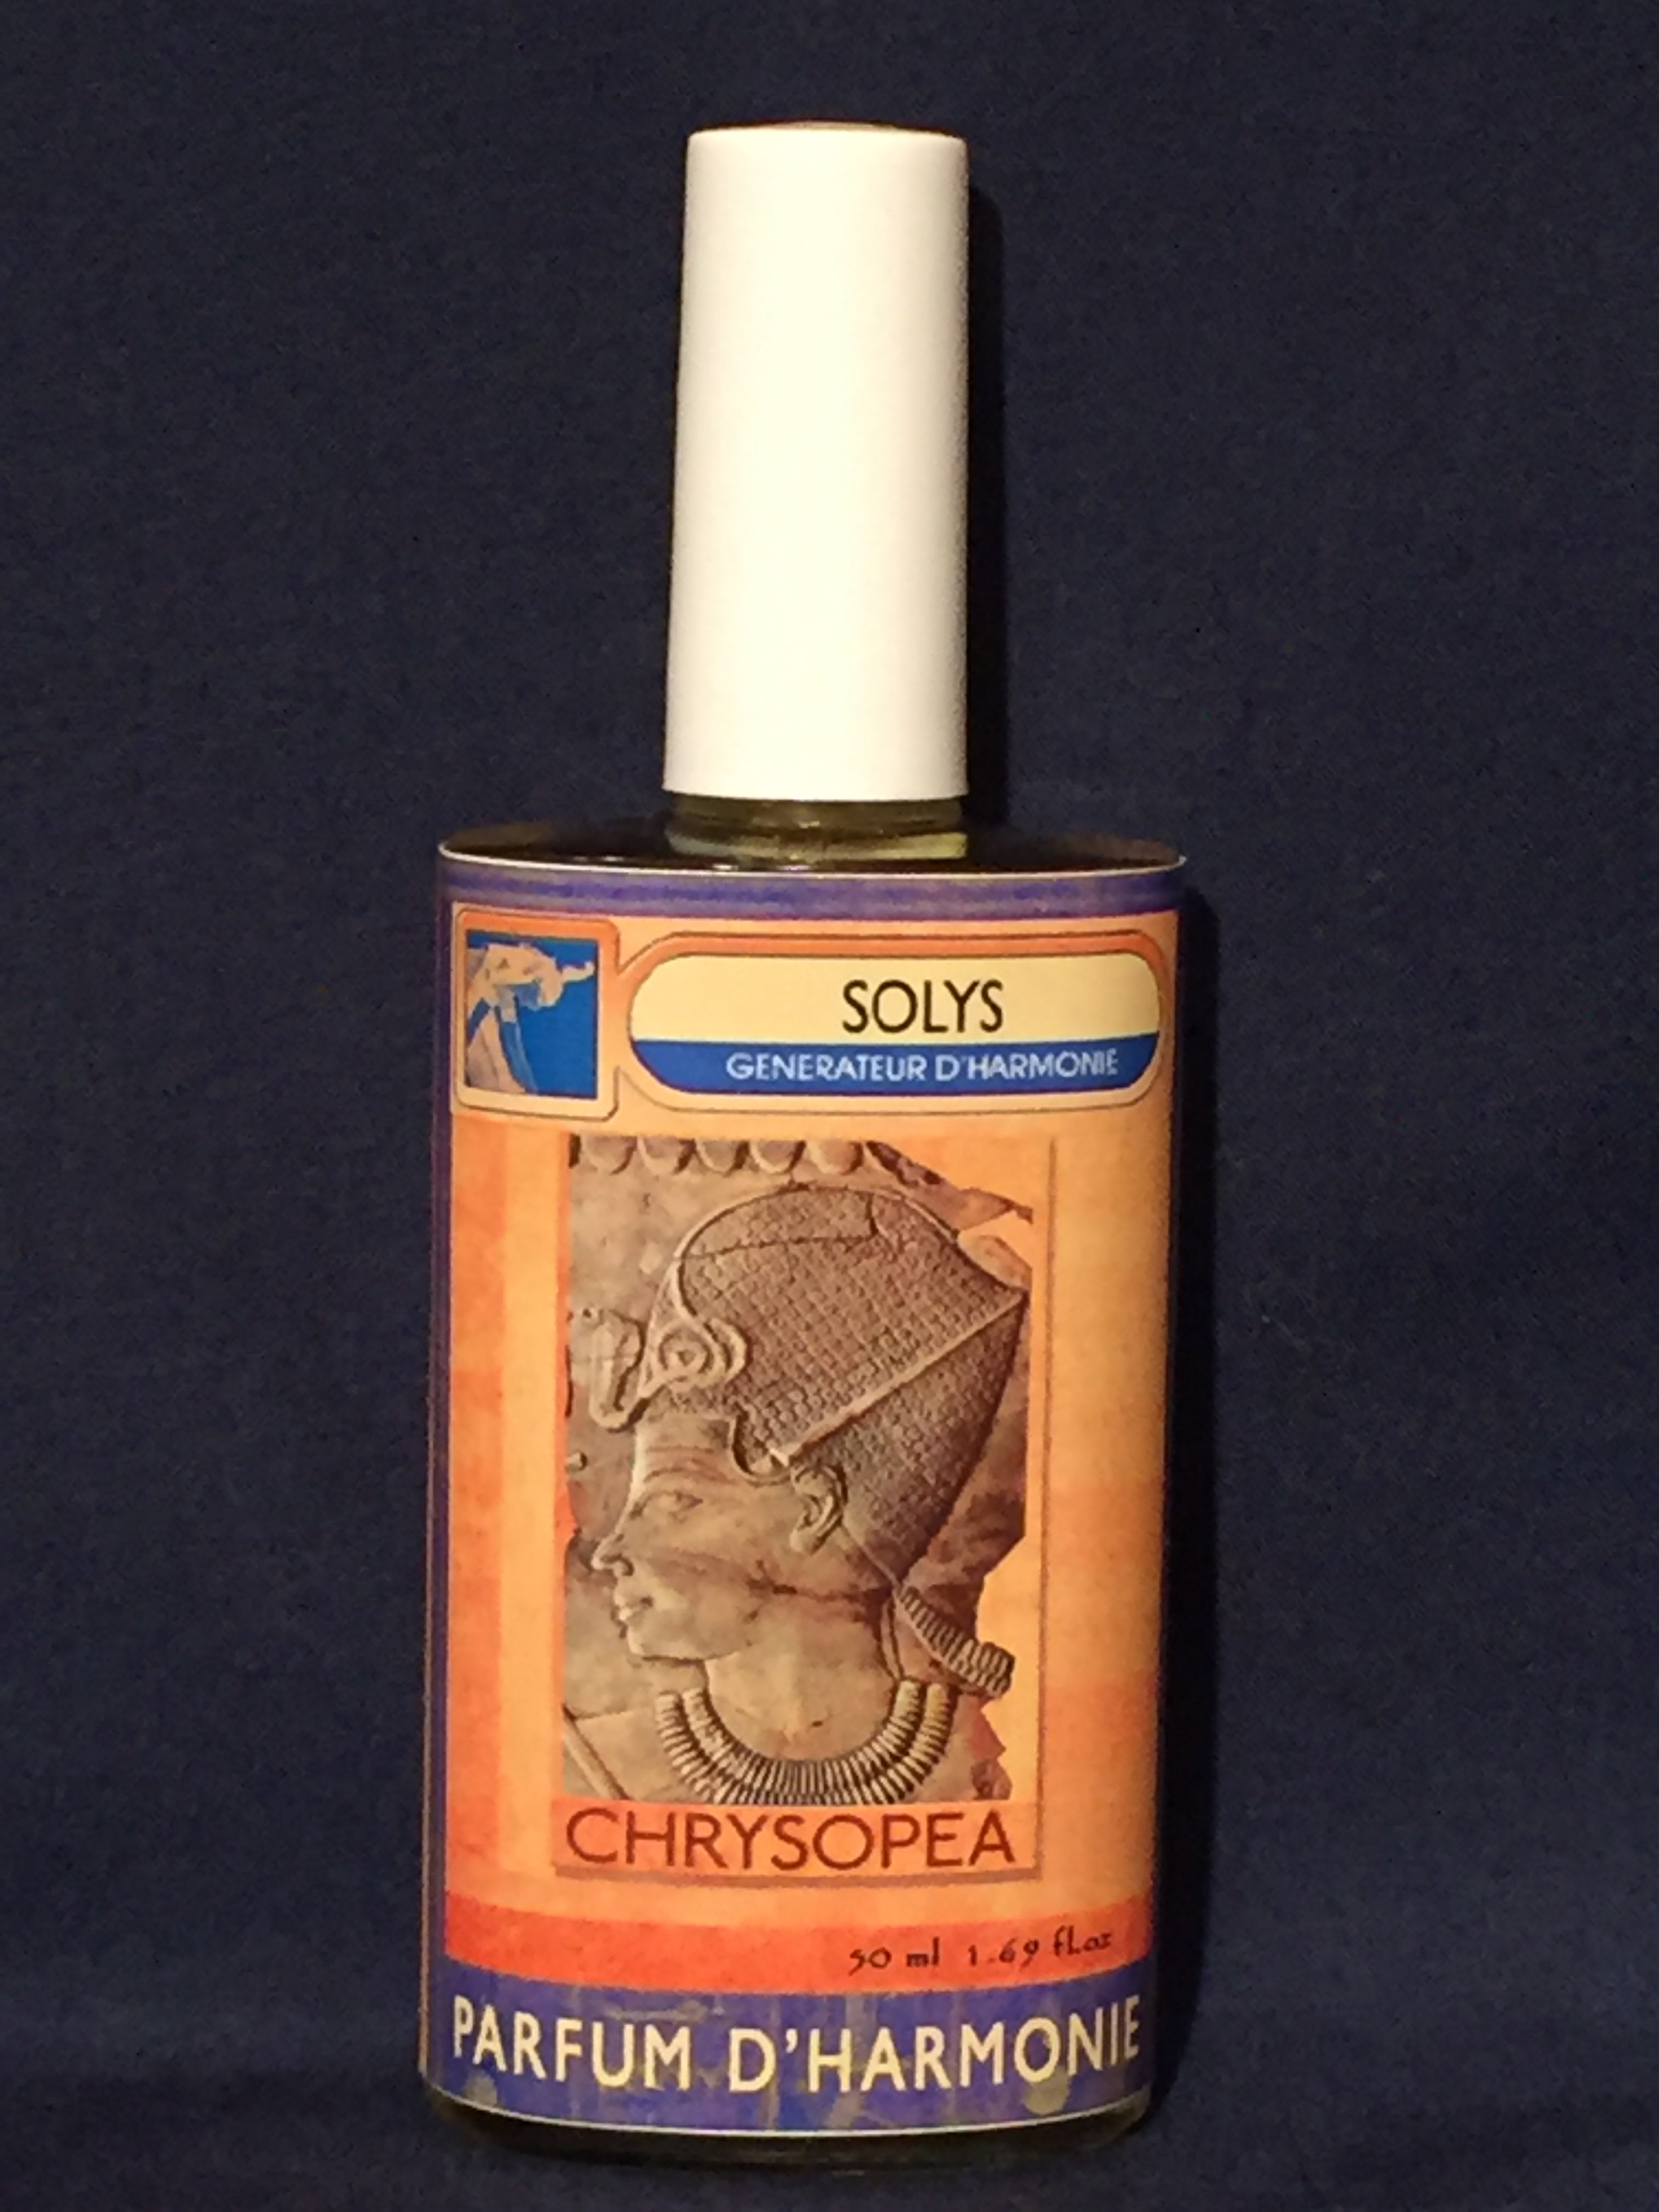 Solys, spagyrie, parfum d'harmonie, distributionbioenergie 